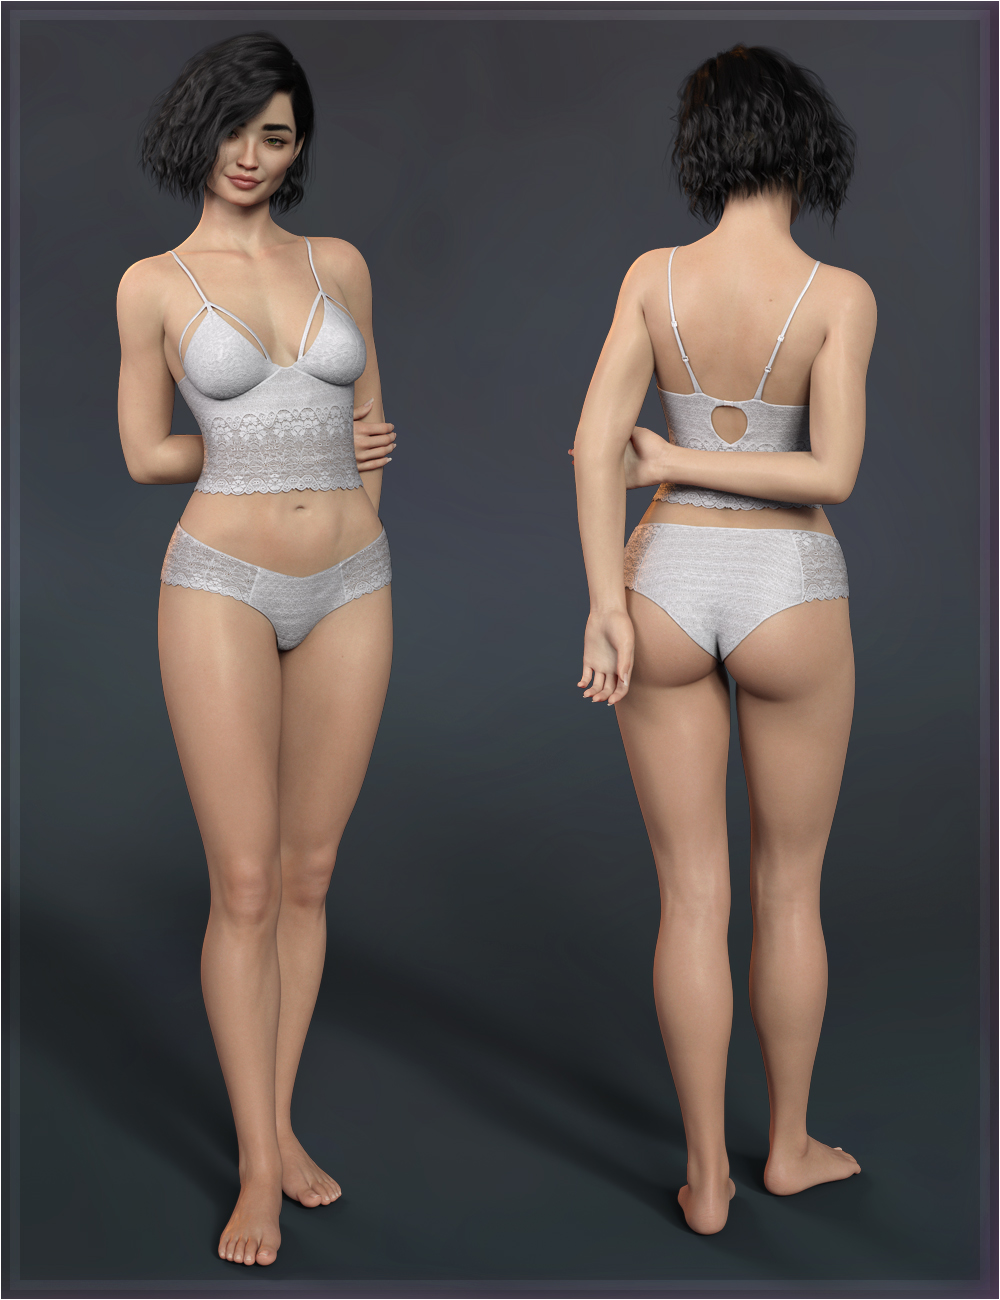 Carabelle for Genesis 8 Female by: hotlilme74OziChick, 3D Models by Daz 3D